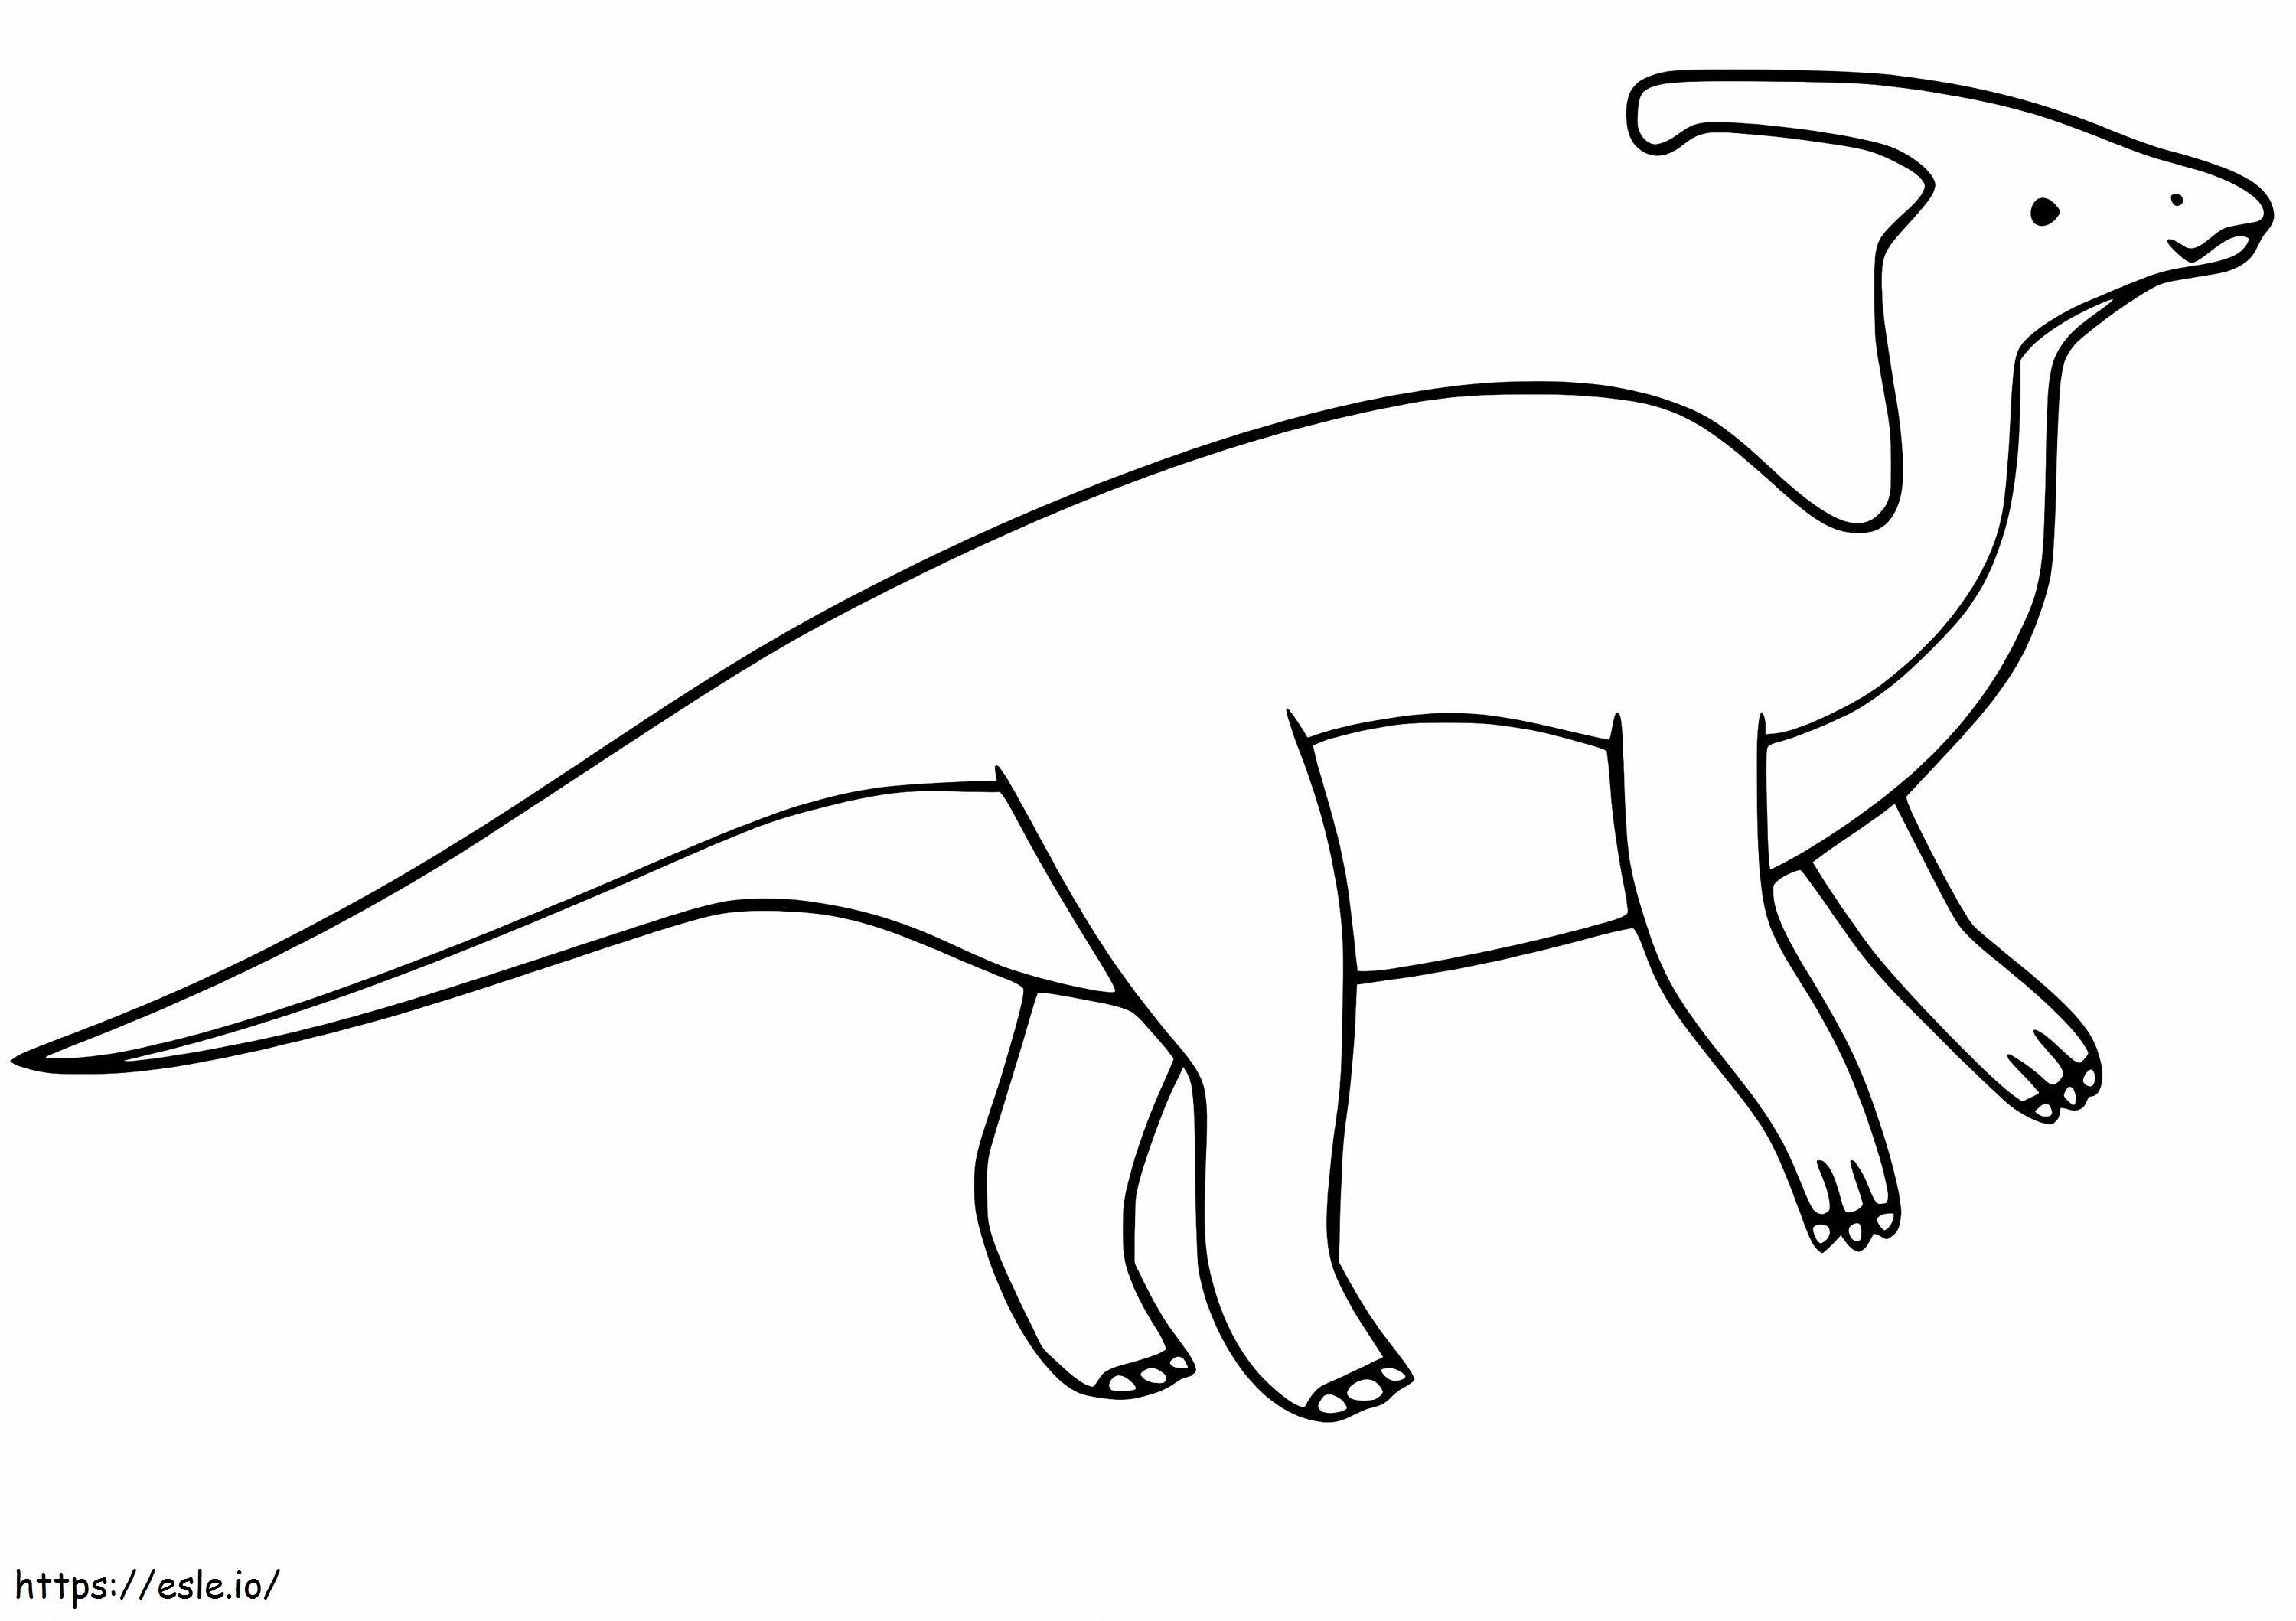 Simple Parasaurolophus coloring page